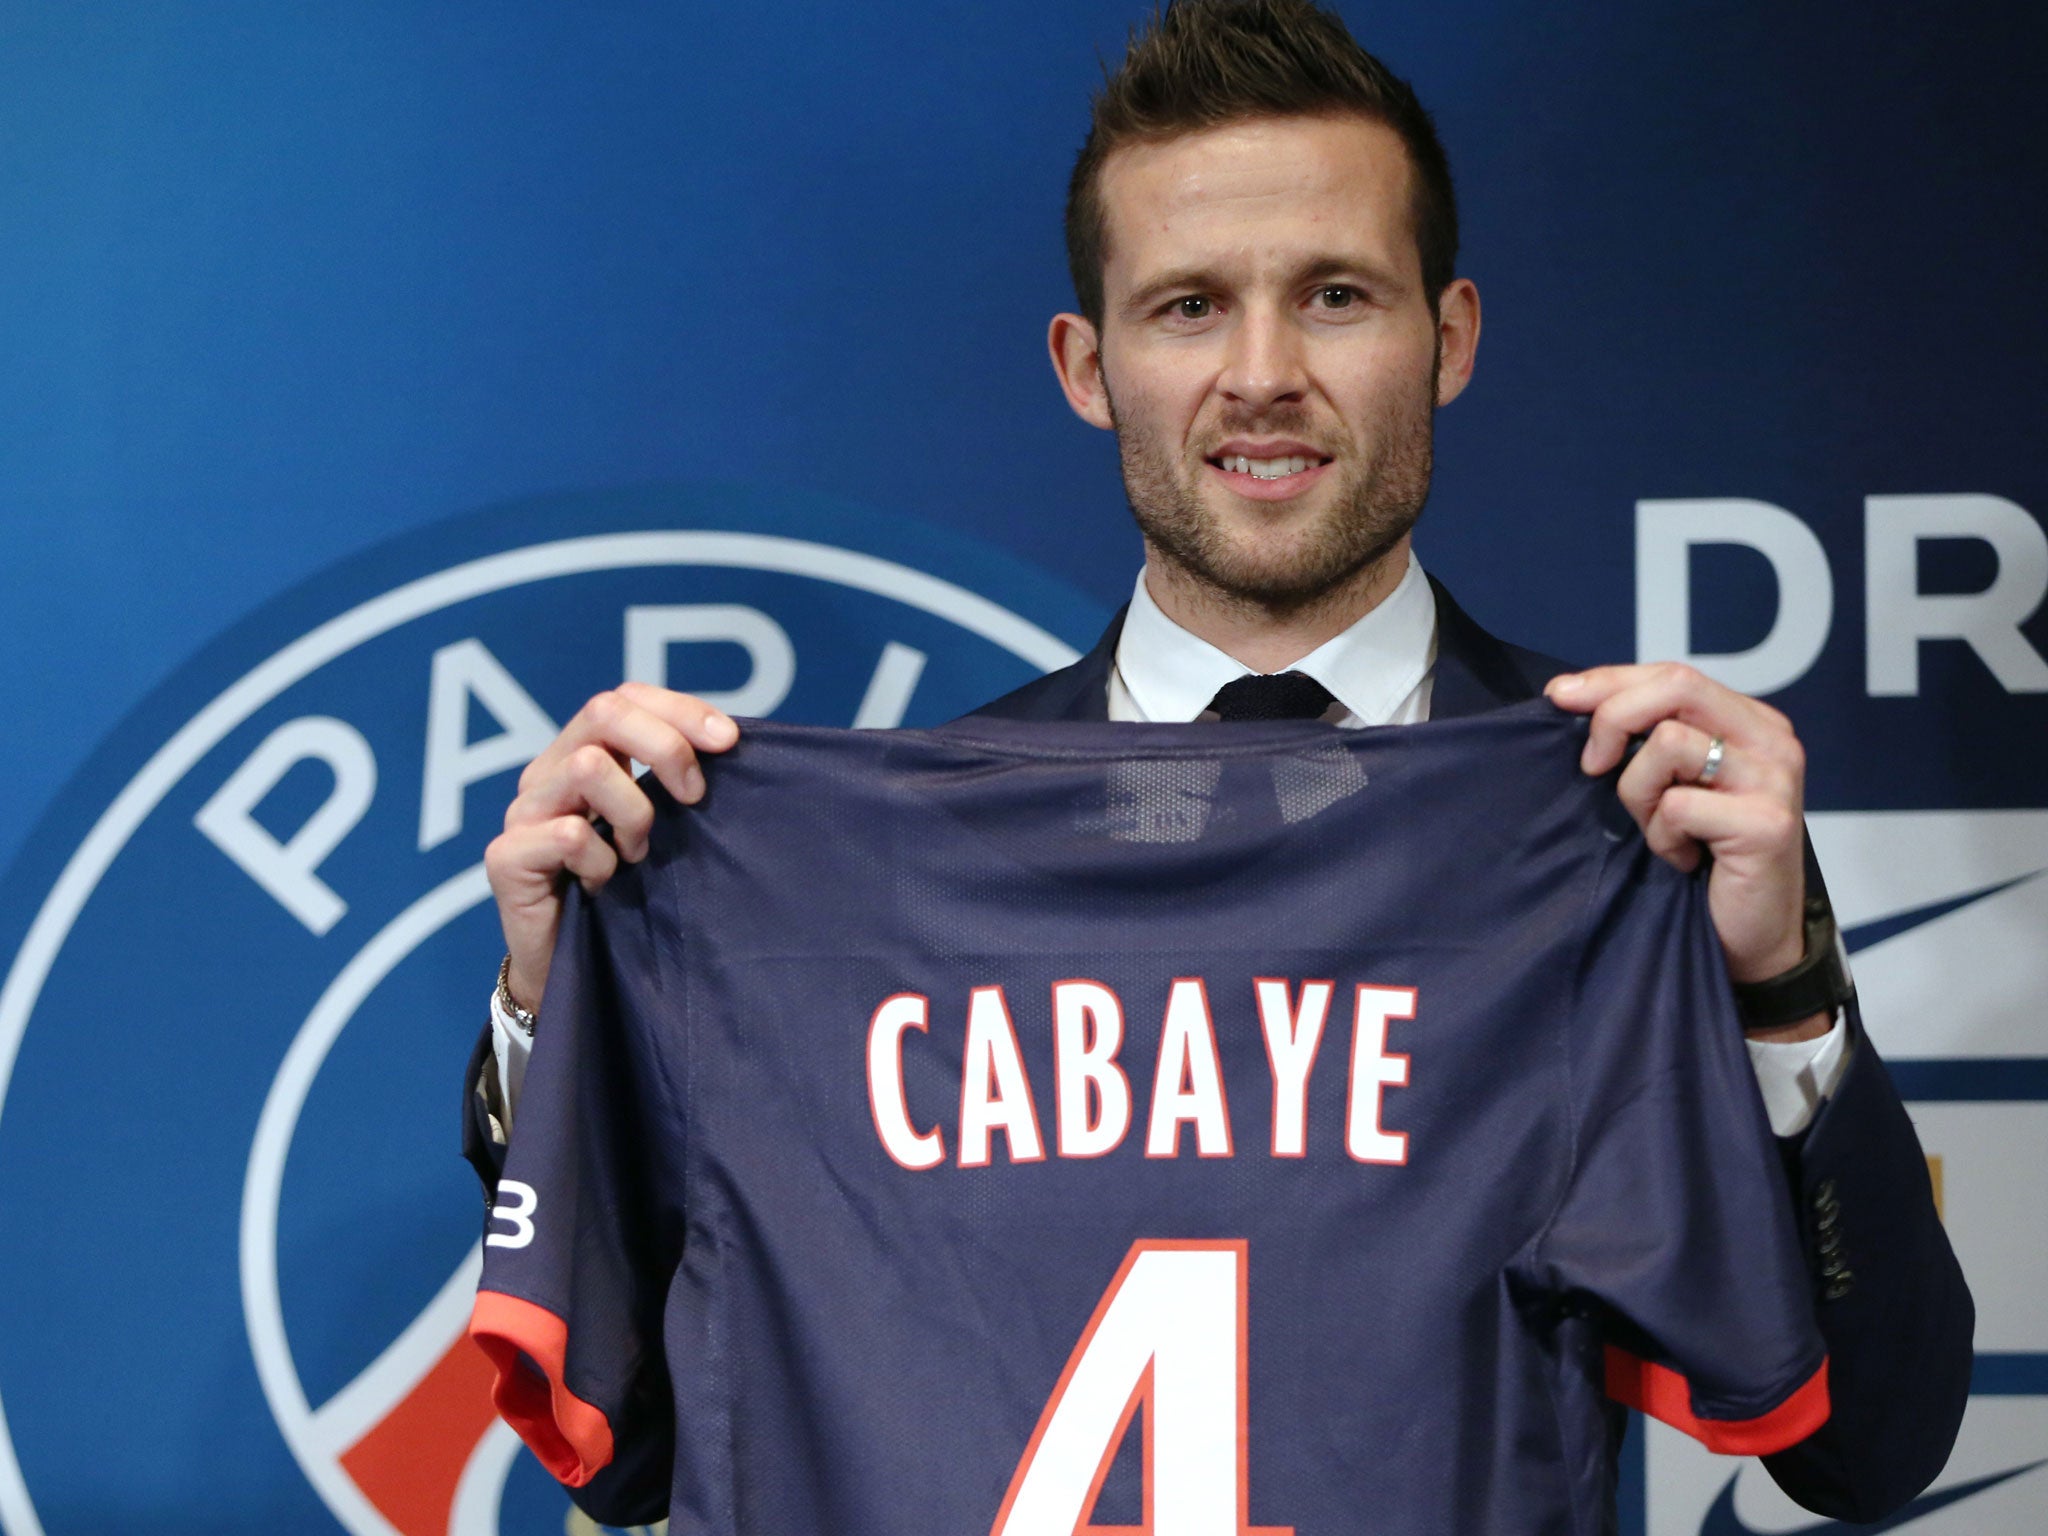 Yohan Cabaye was unveiled at Paris Saint-Germain on Wednesday